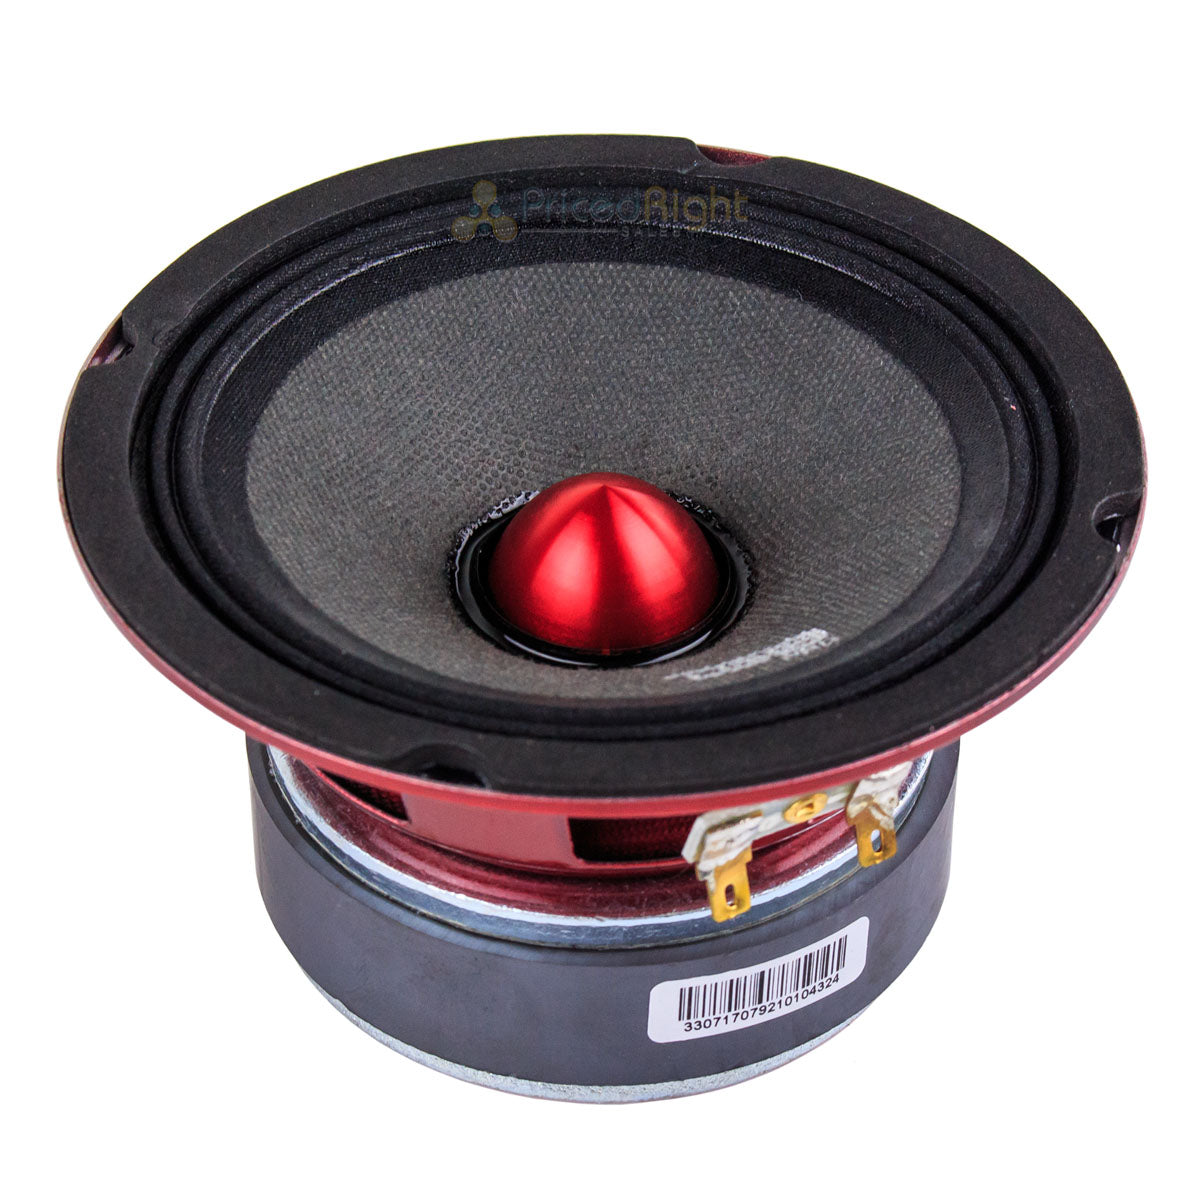 2 DS18 PRO-X5.4BM 300W Max 5.25" Midrange Loud Speakers 4 Ohm High Strength New